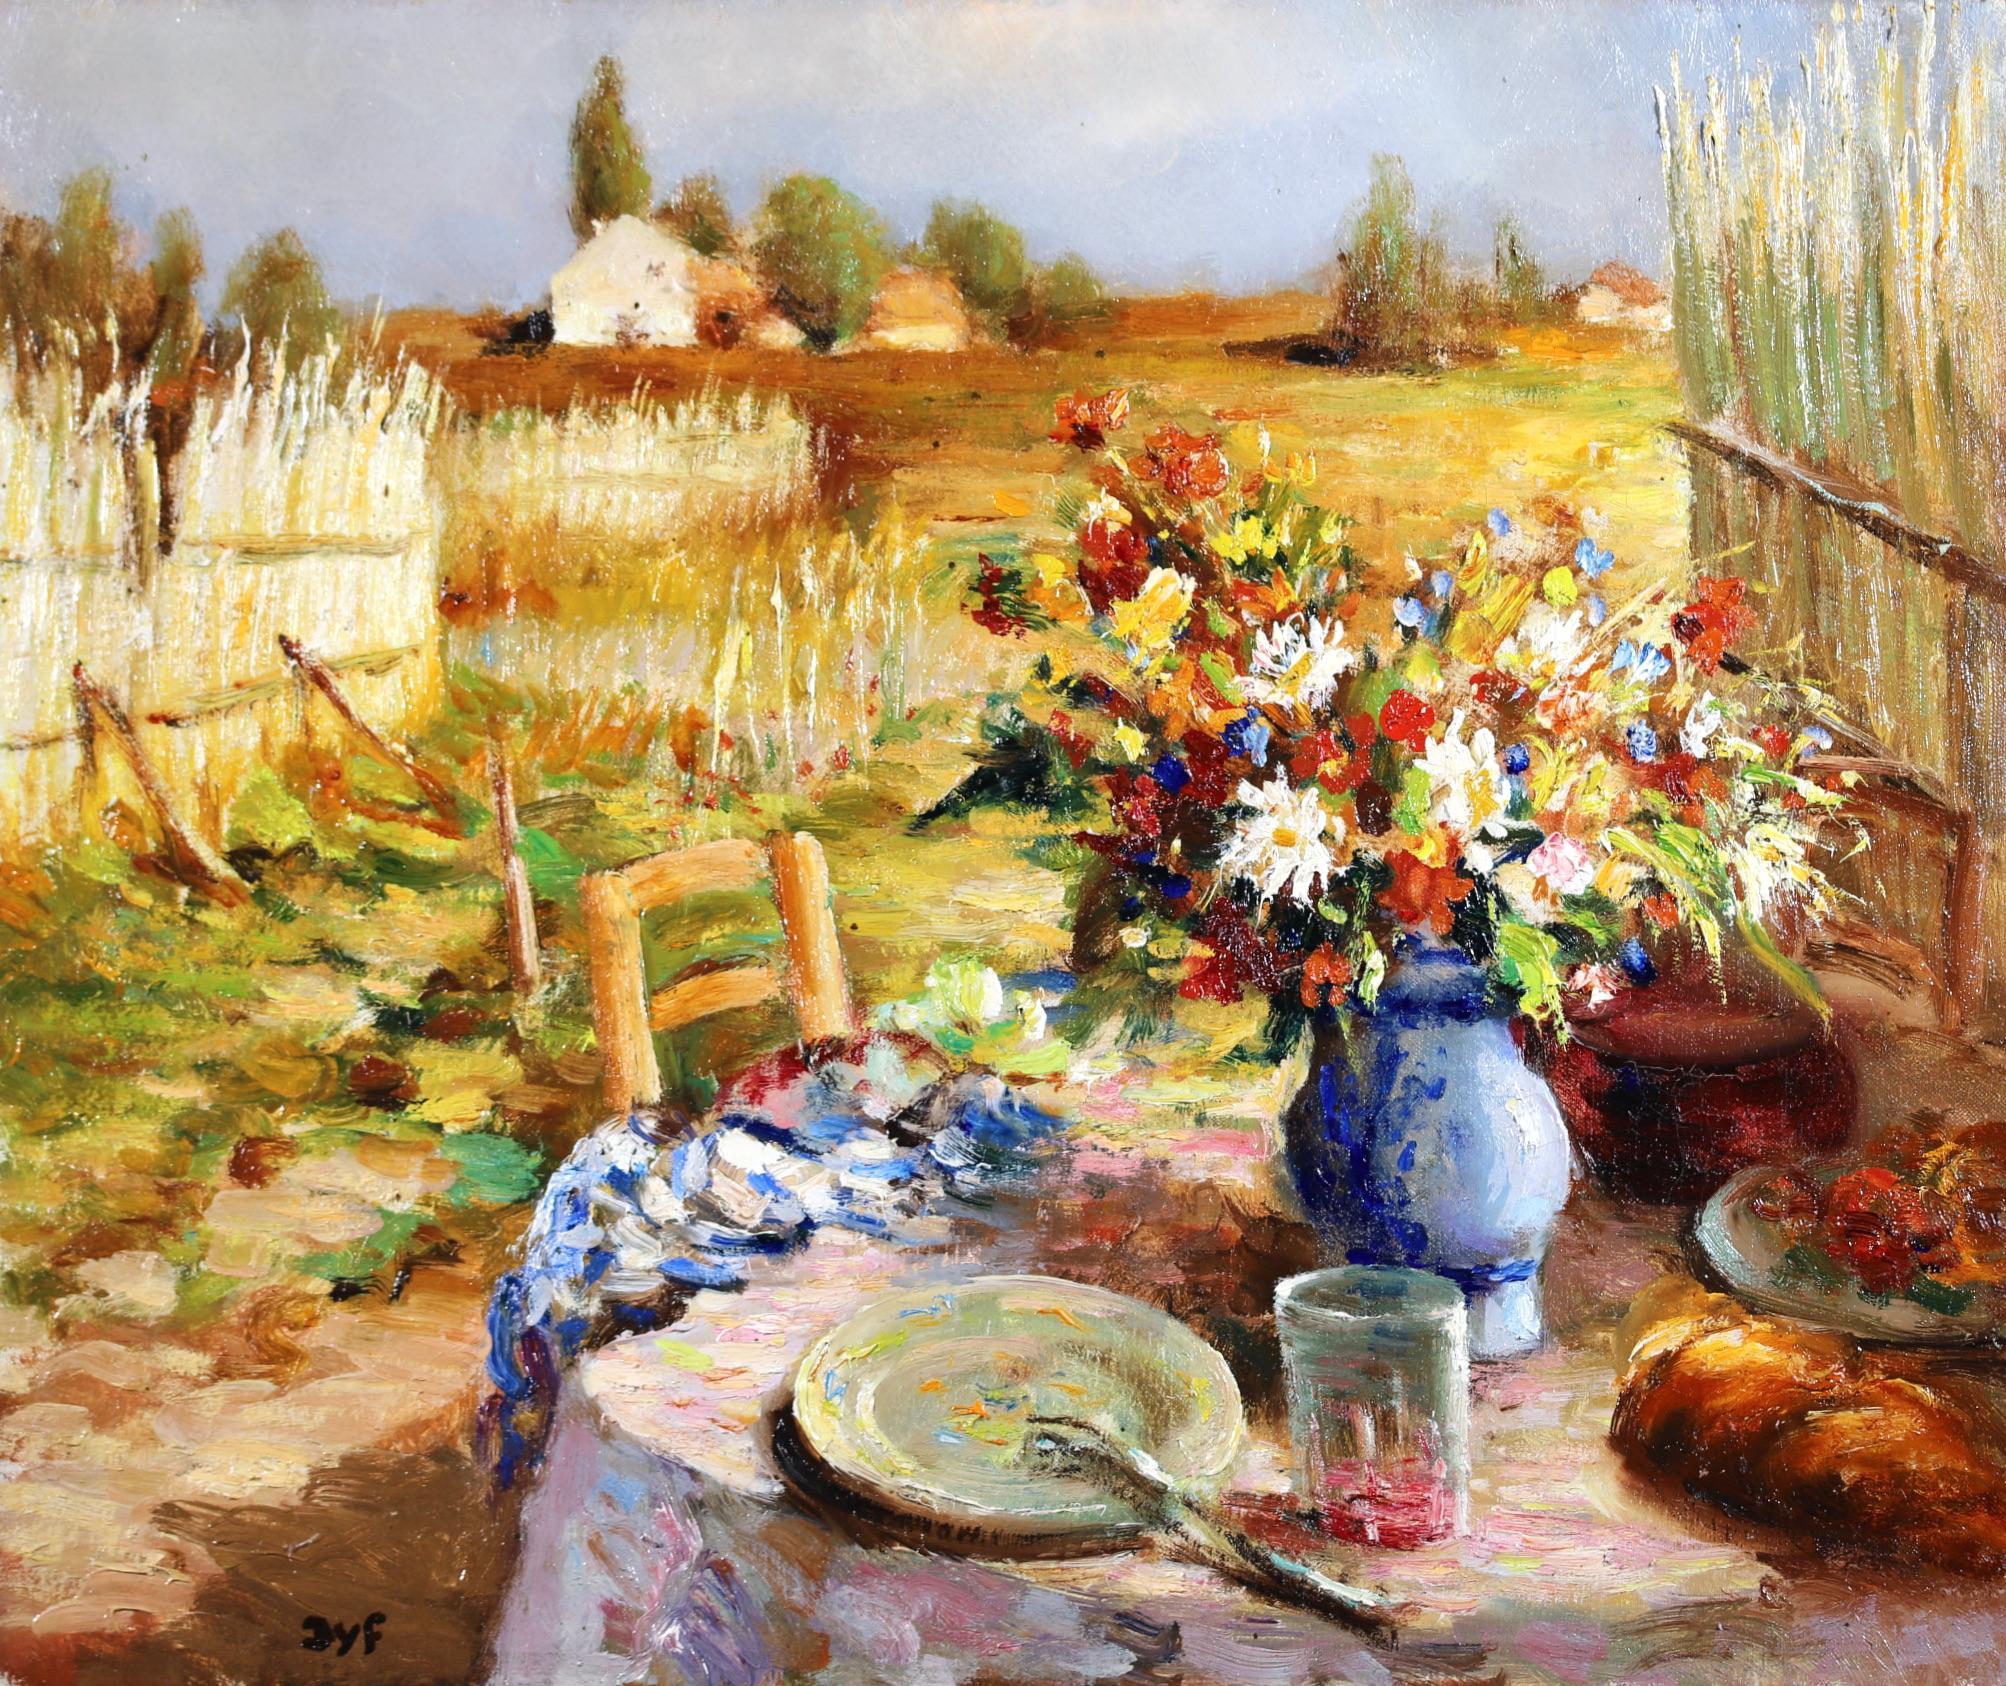 Le Petit Dejeuner - Postimpressionistische Landschaft, Ölgemälde von Marcel Dyf